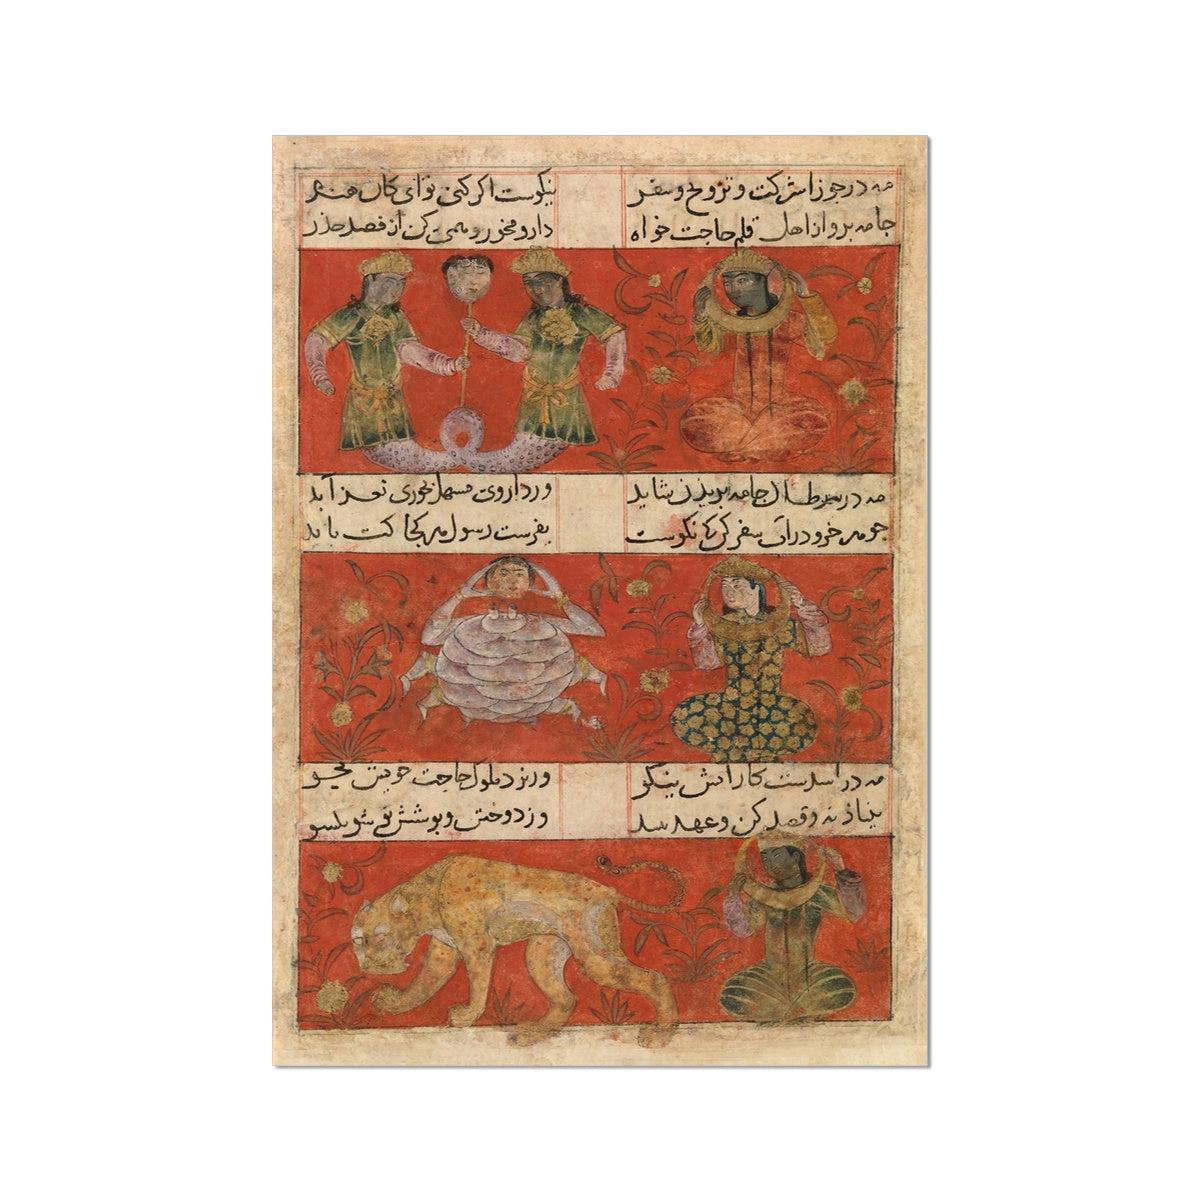 Persian Poetry Art | Islamic Sufi Art, Celestrial Moon Codex Illumination | Zodiac Gemini Cancer Rumi Fine Art Print - Sacred Surreal